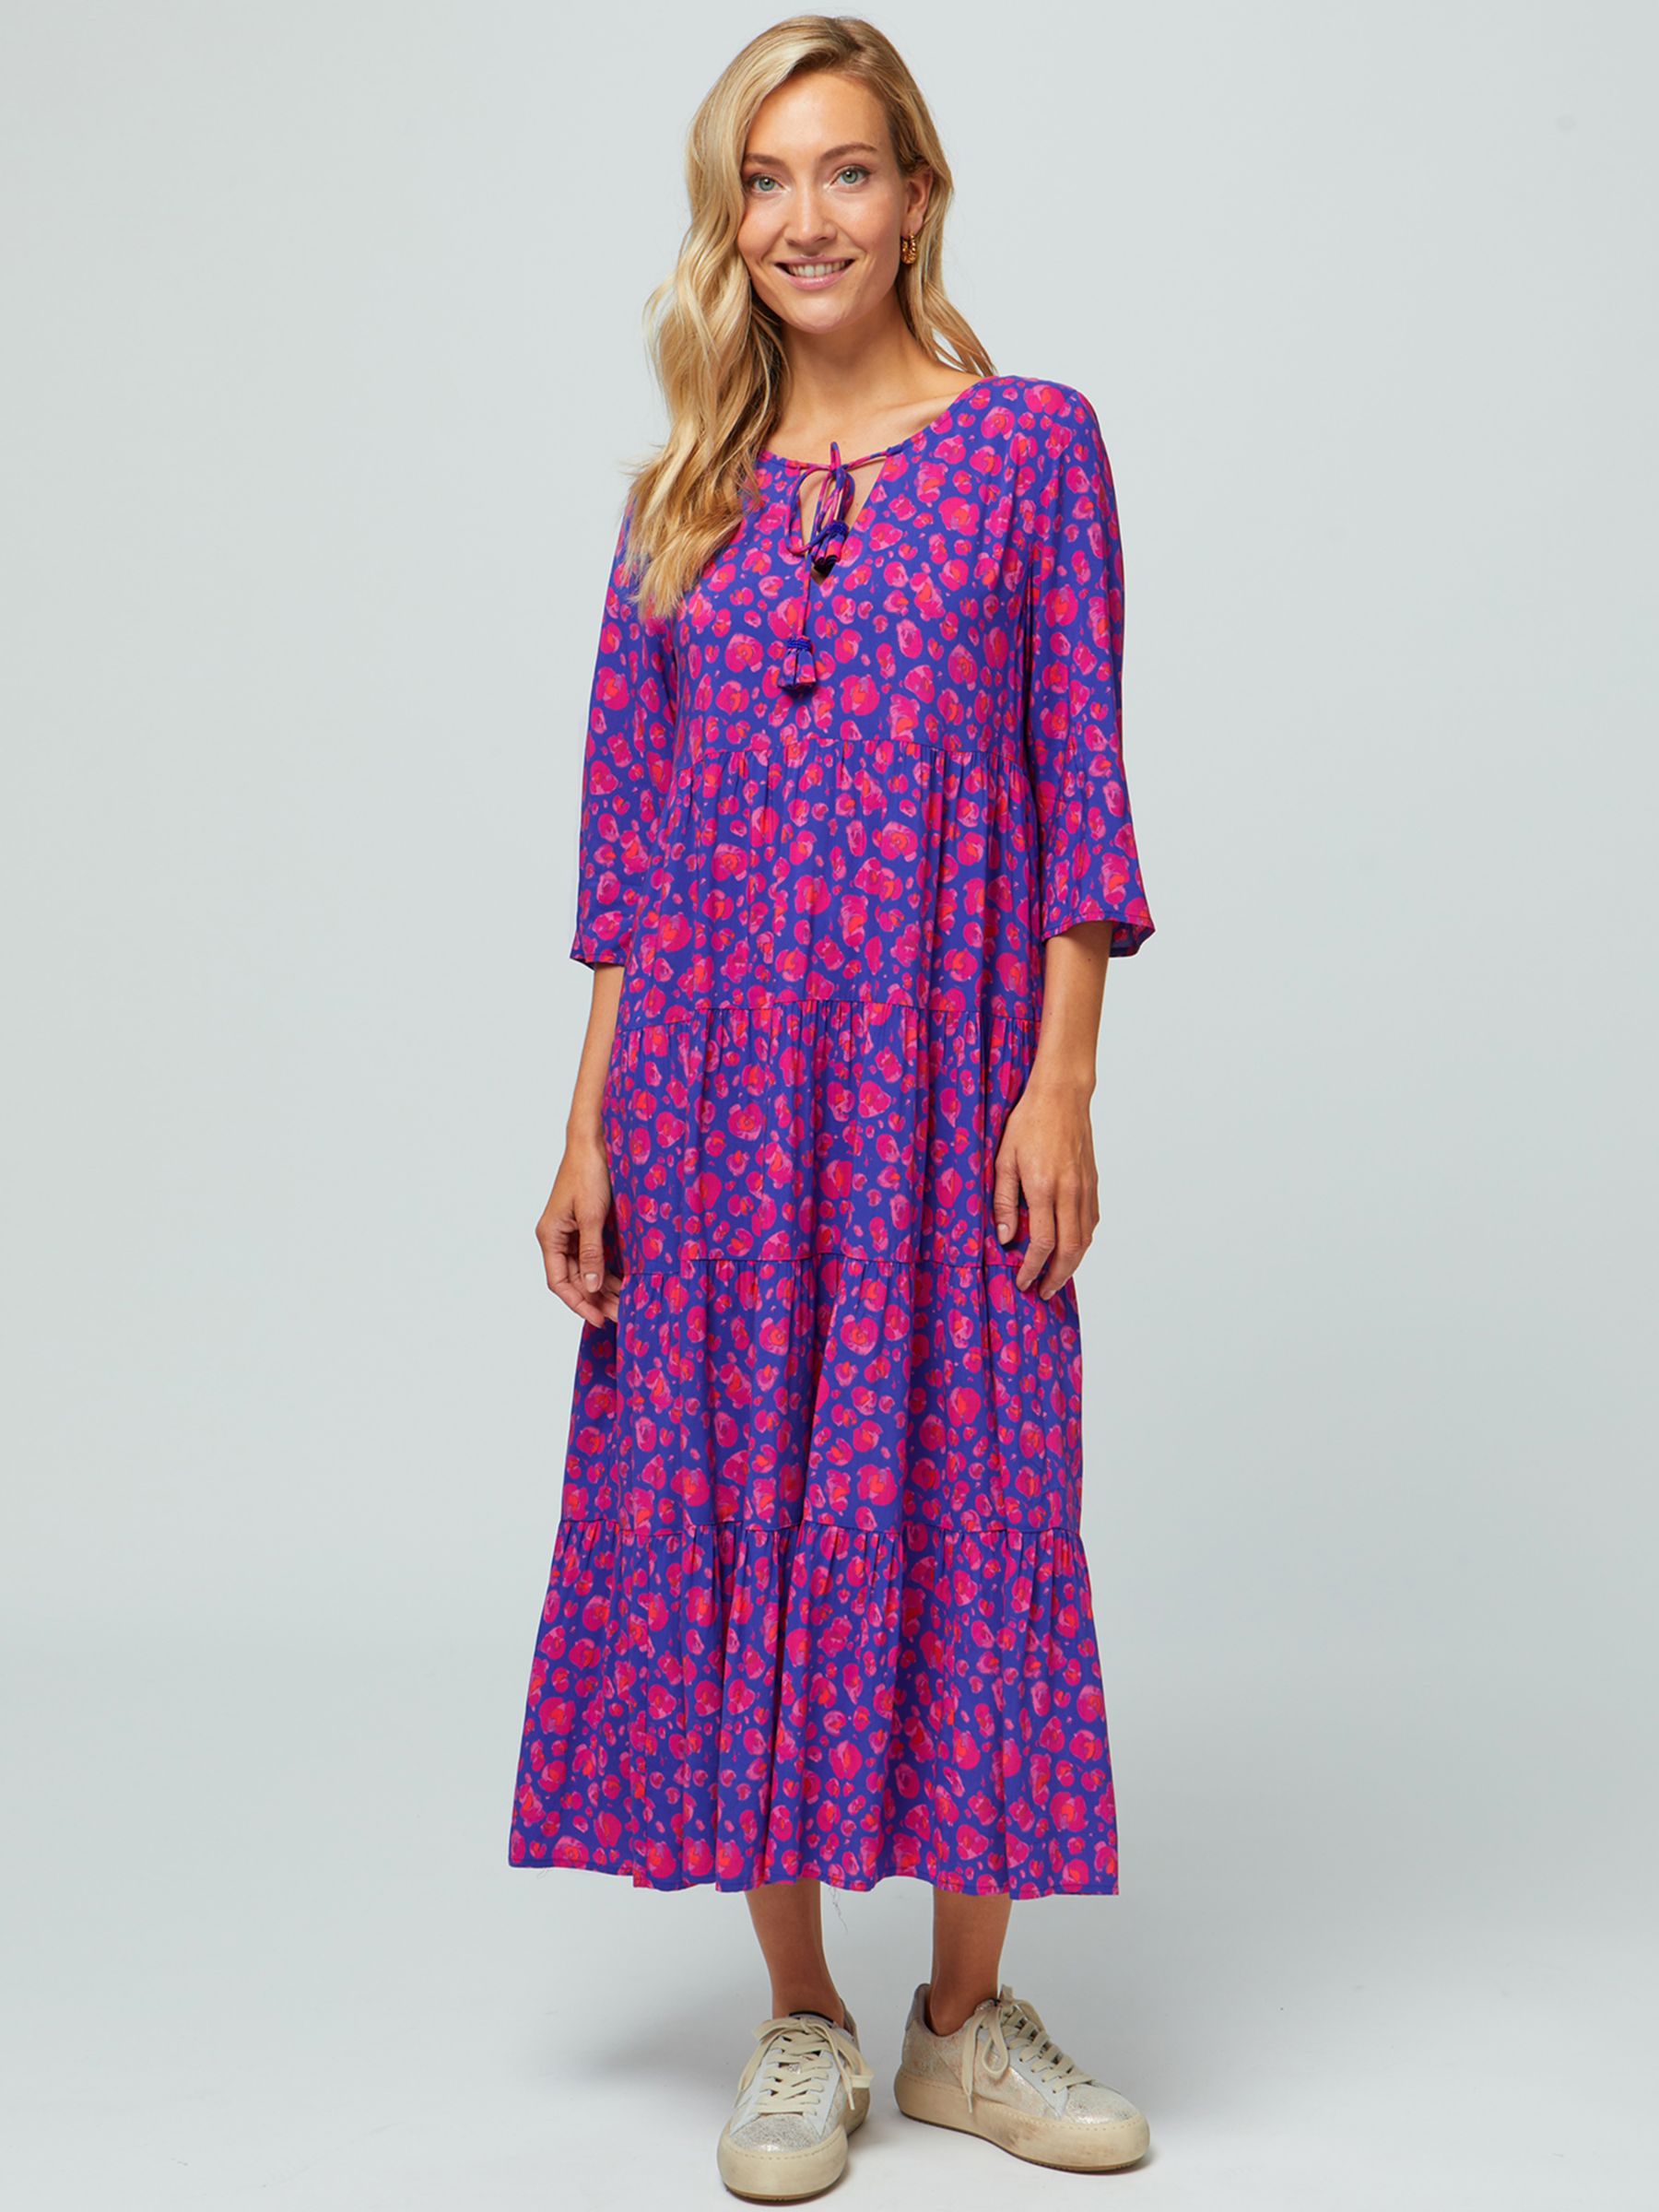 Aspiga Emma Light Weight Dress, Cheetah Blue/Pink at John Lewis & Partners